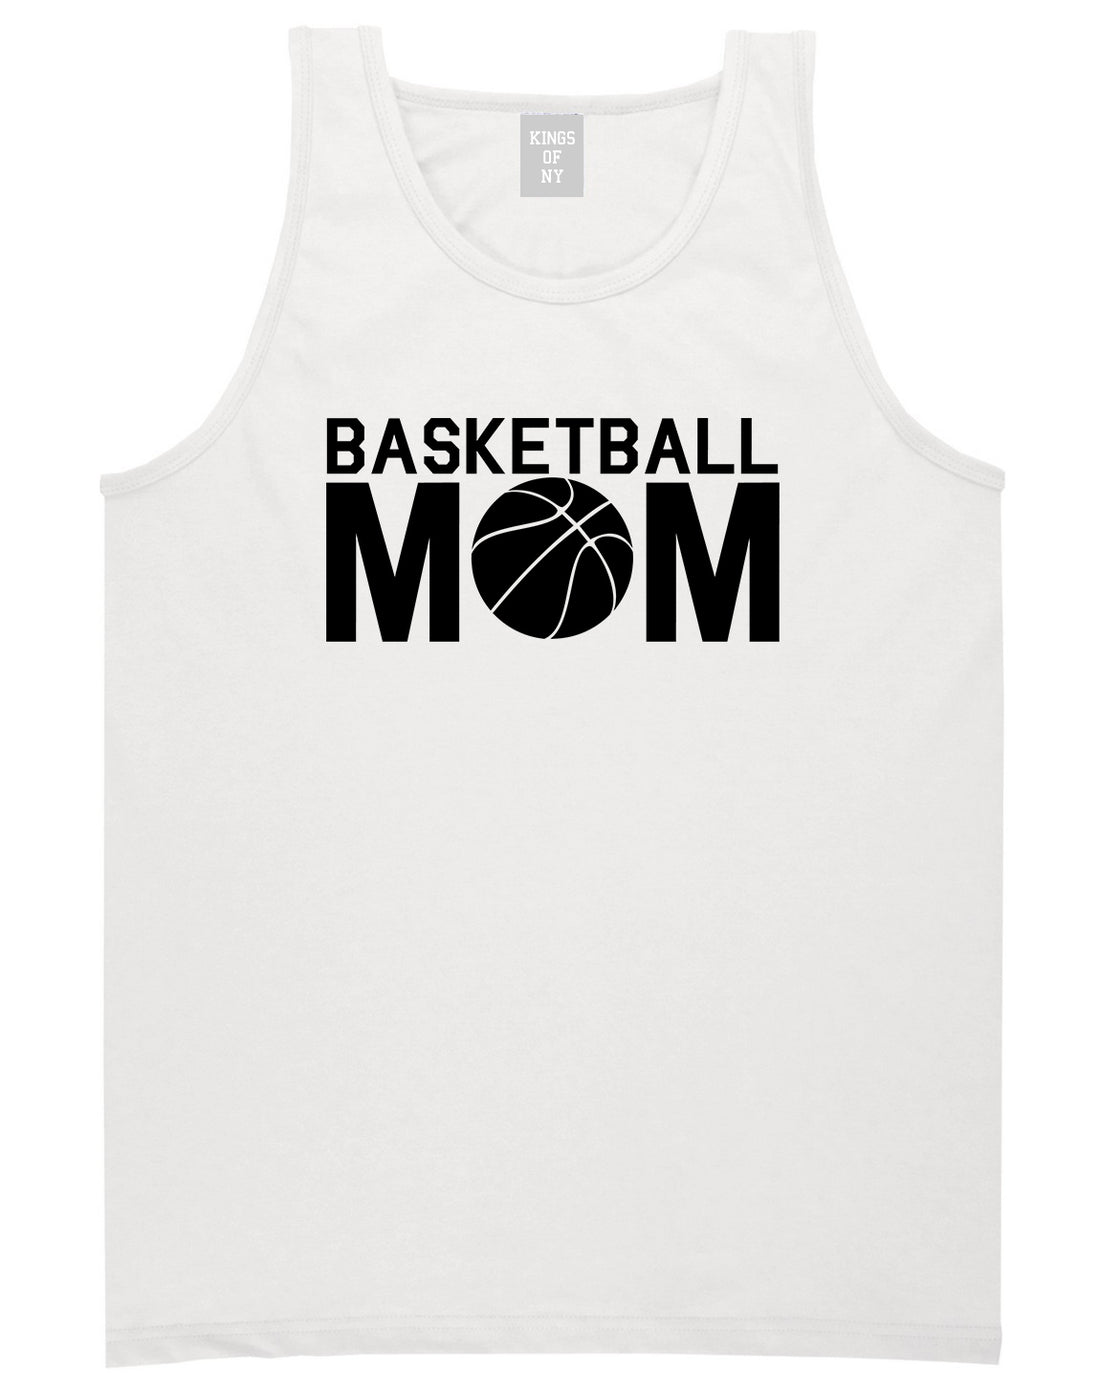 Basketball Mom White Tank Top Shirt by Kings Of NY